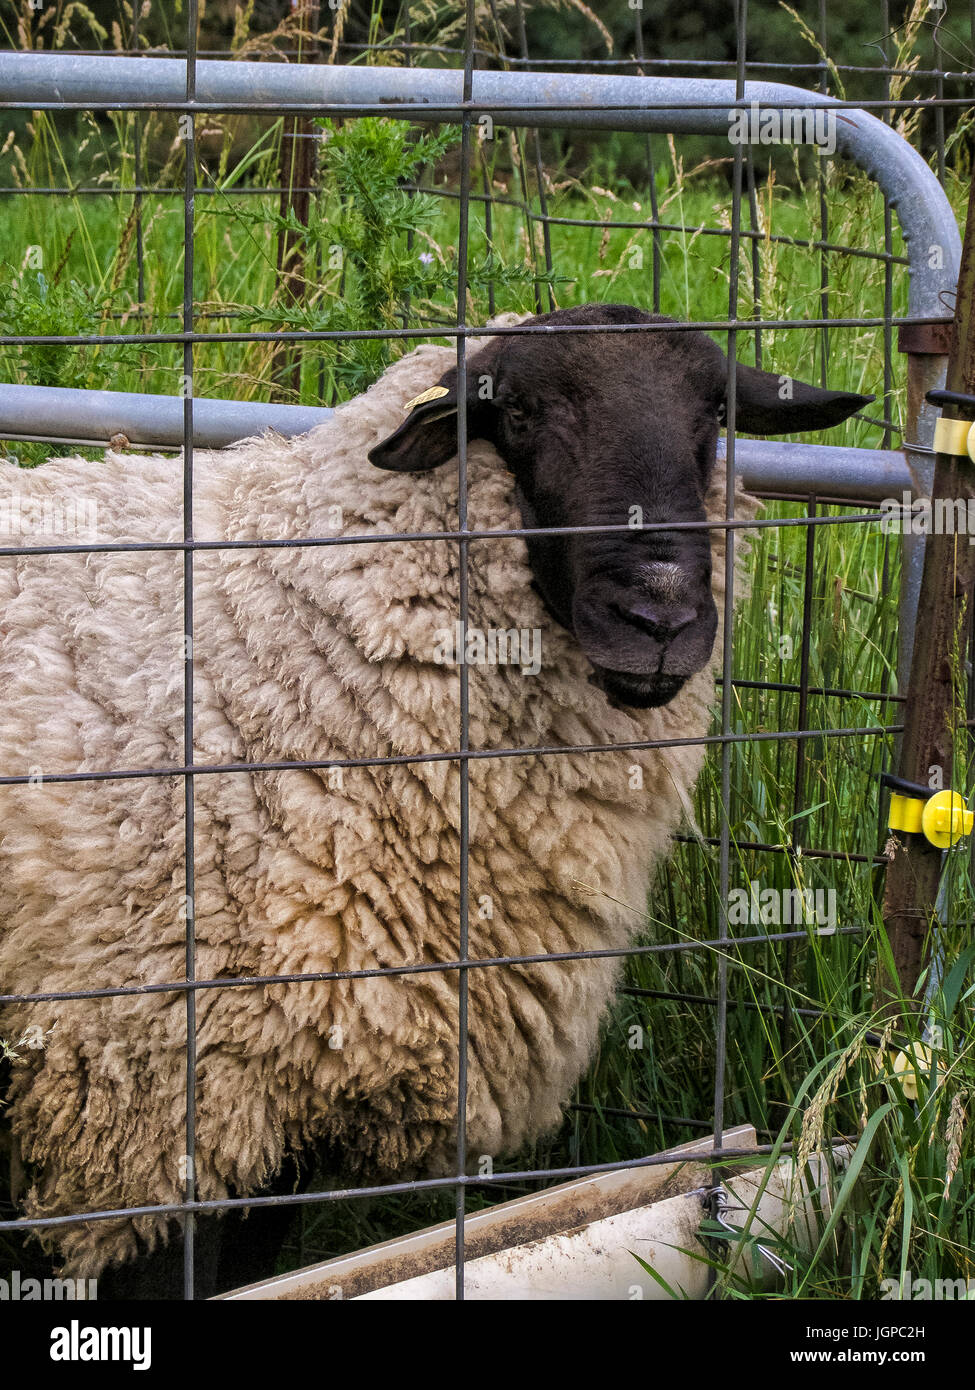 Farm animal, sheep Stock Photo